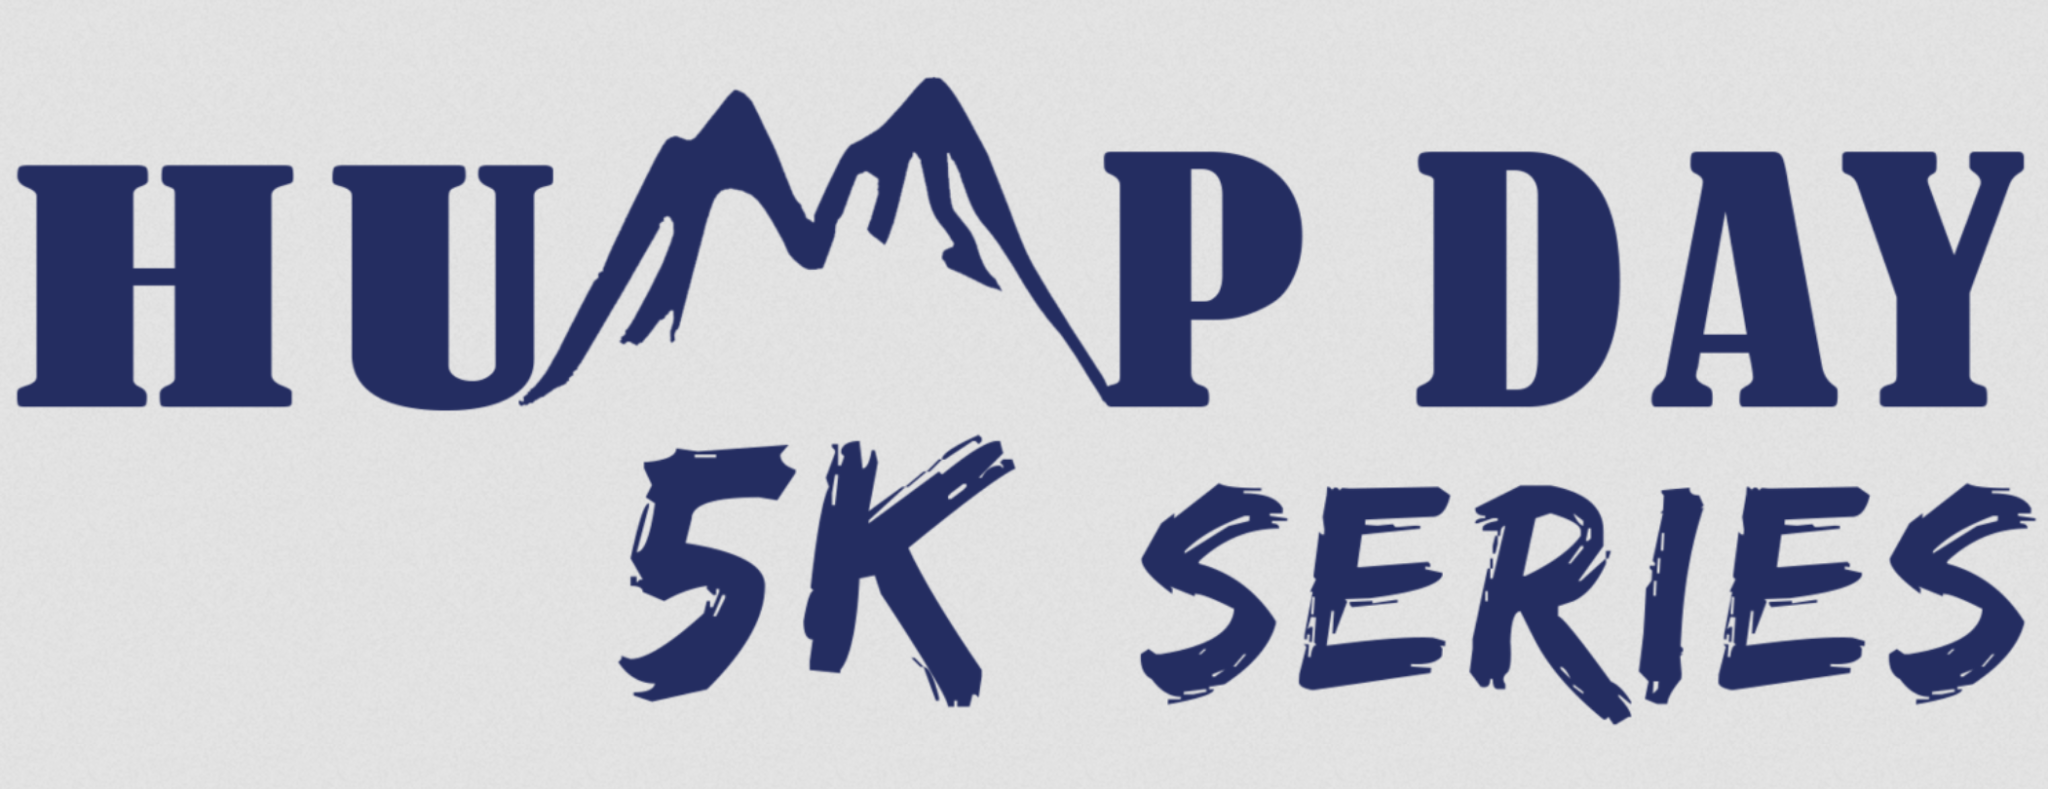 Hump Day 5K Summer Series Aug logo on RaceRaves